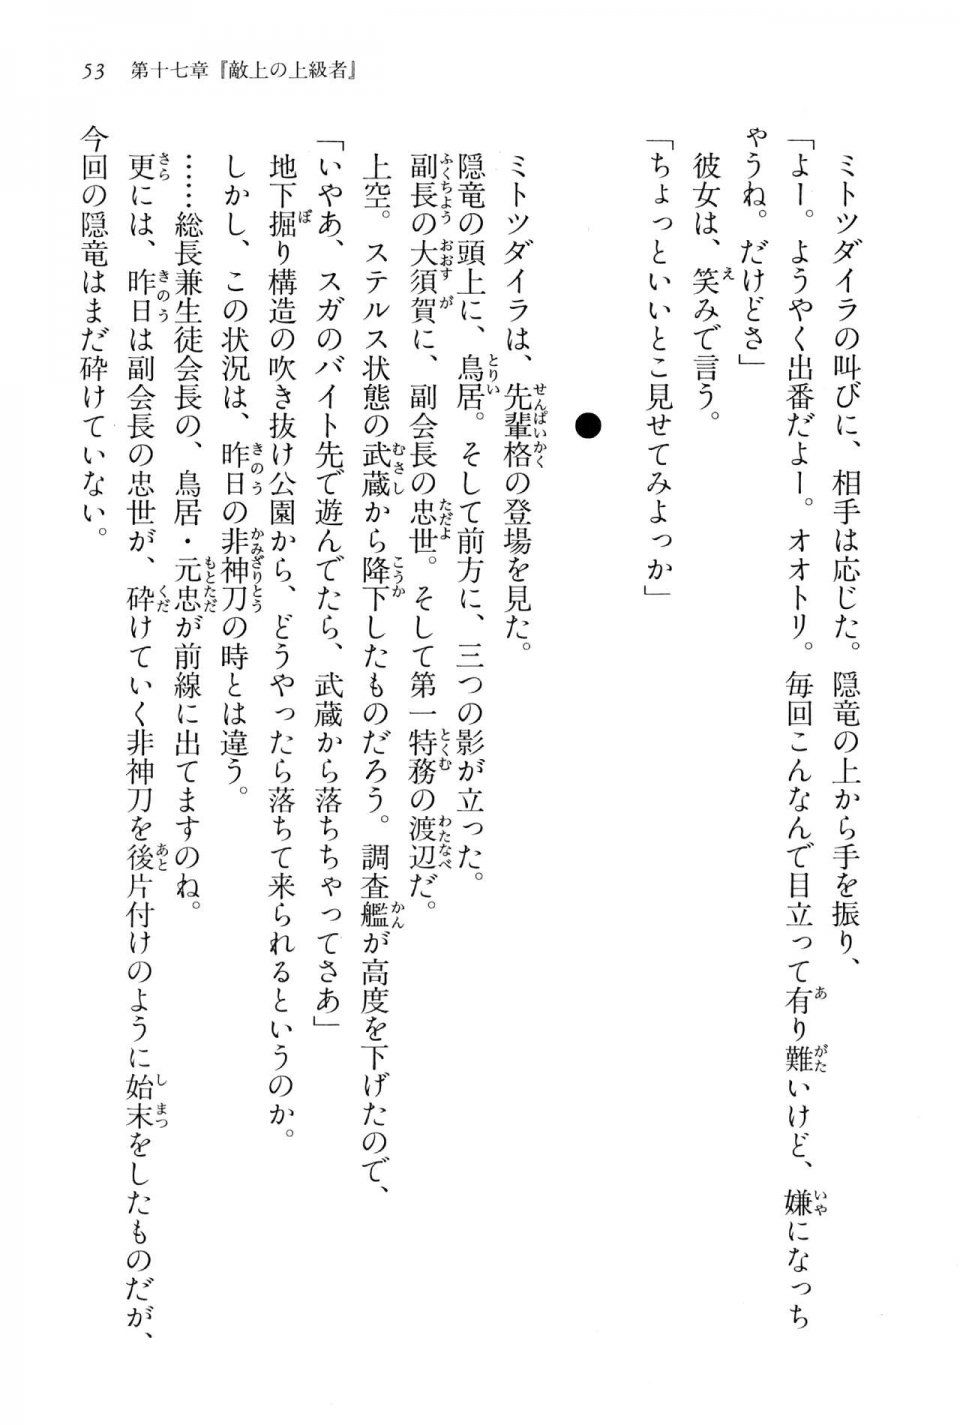 Kyoukai Senjou no Horizon BD Special Mininovel Vol 4(2B) - Photo #57